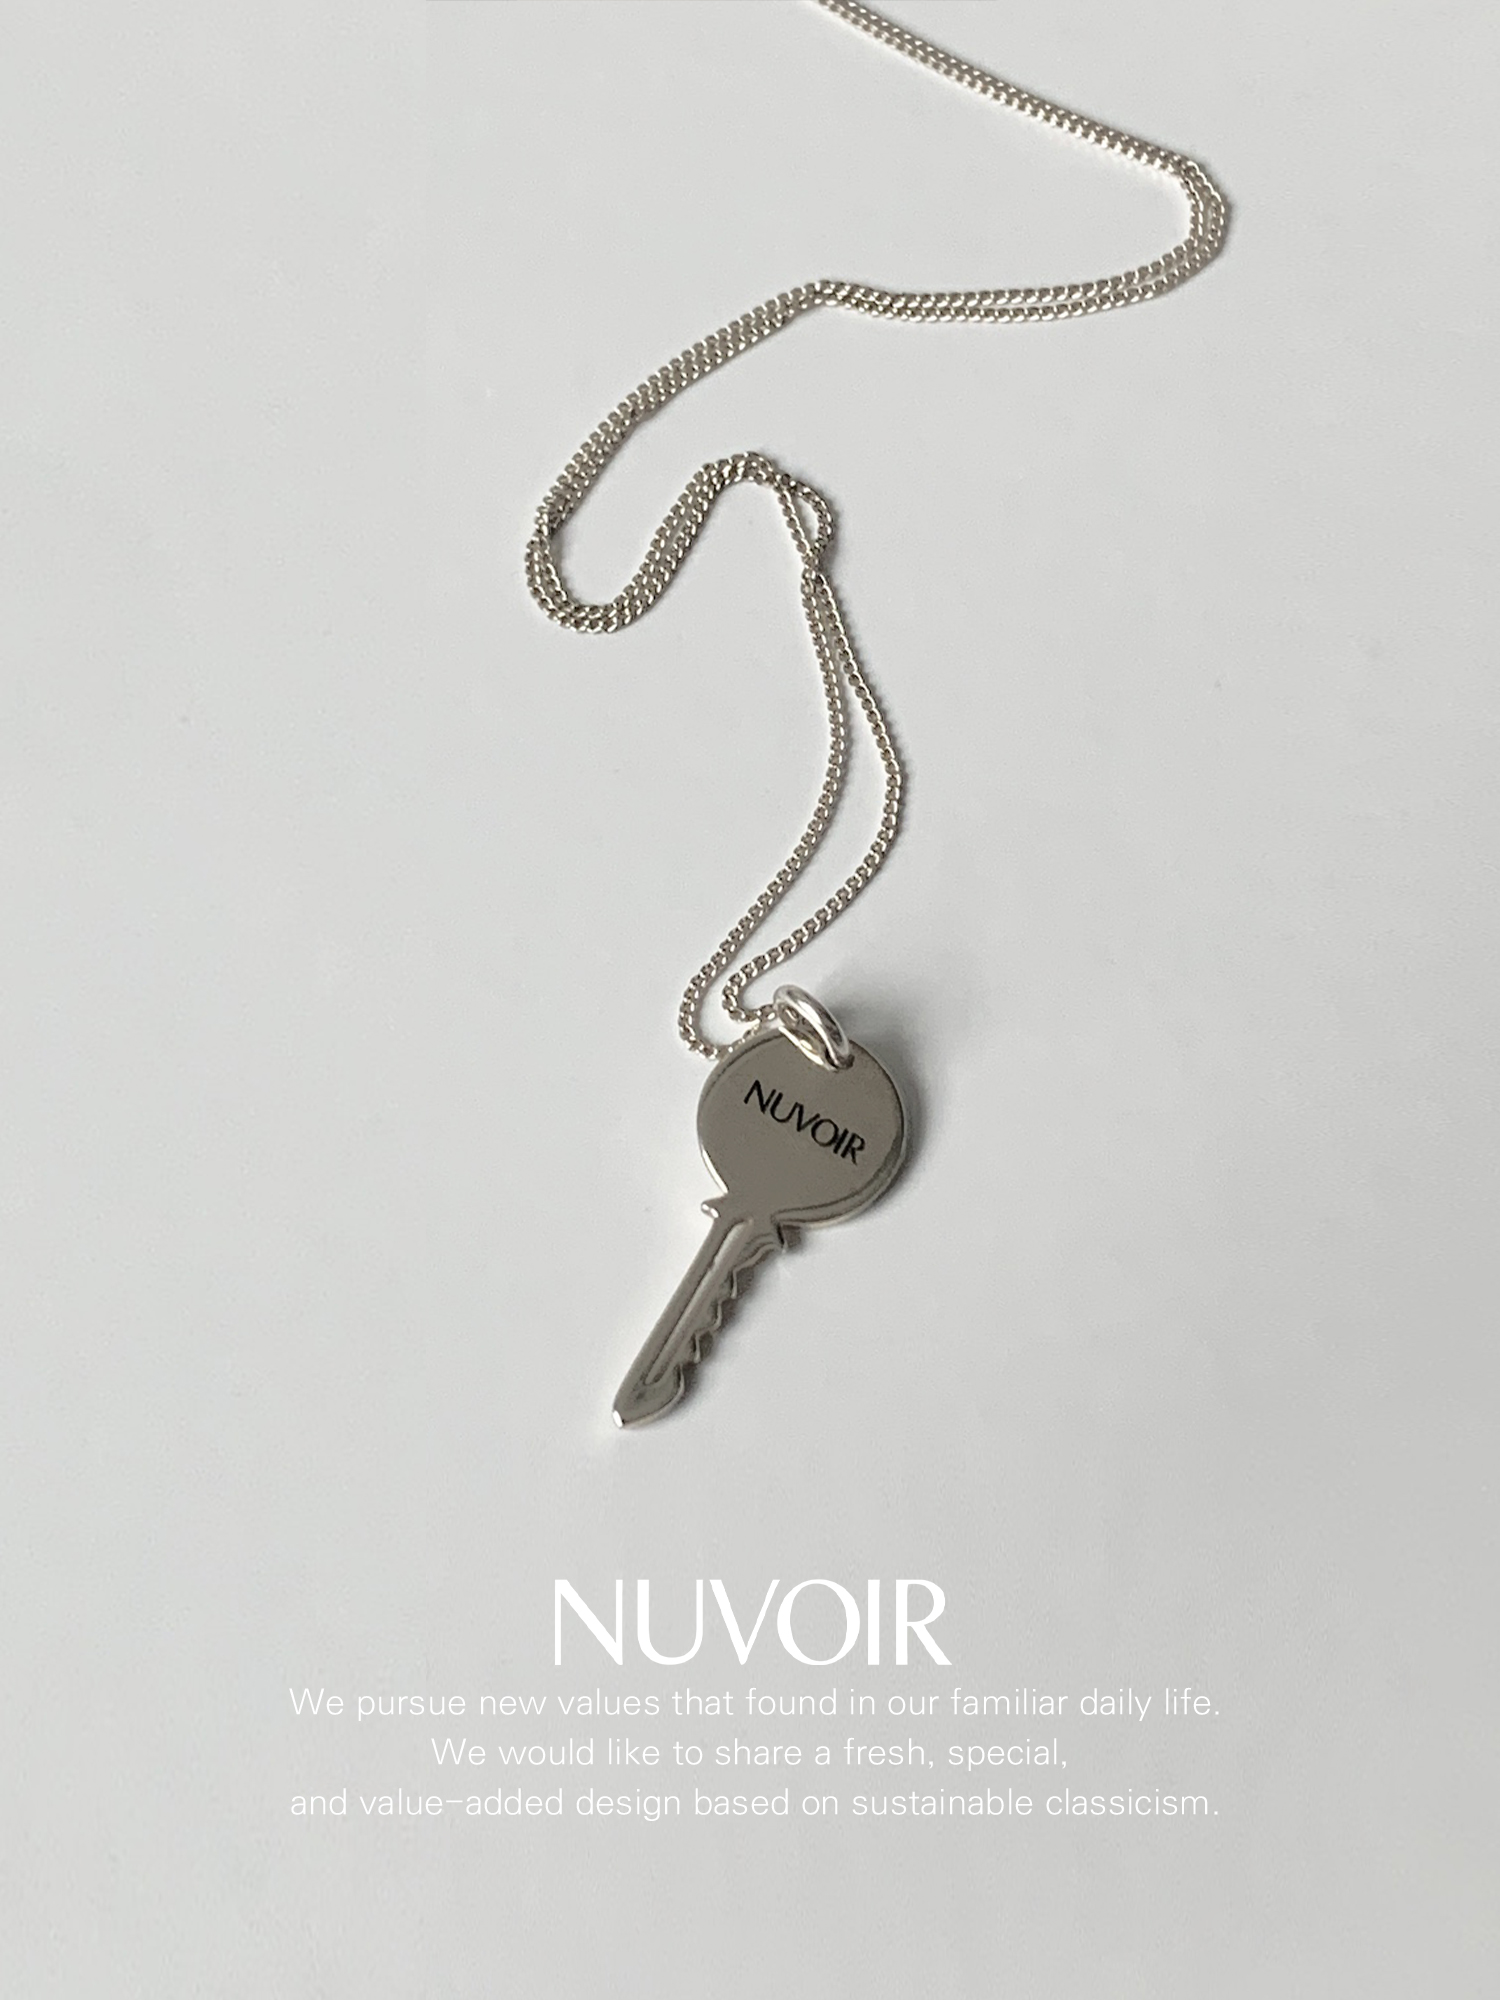 [Made] NUVOIR key necklace